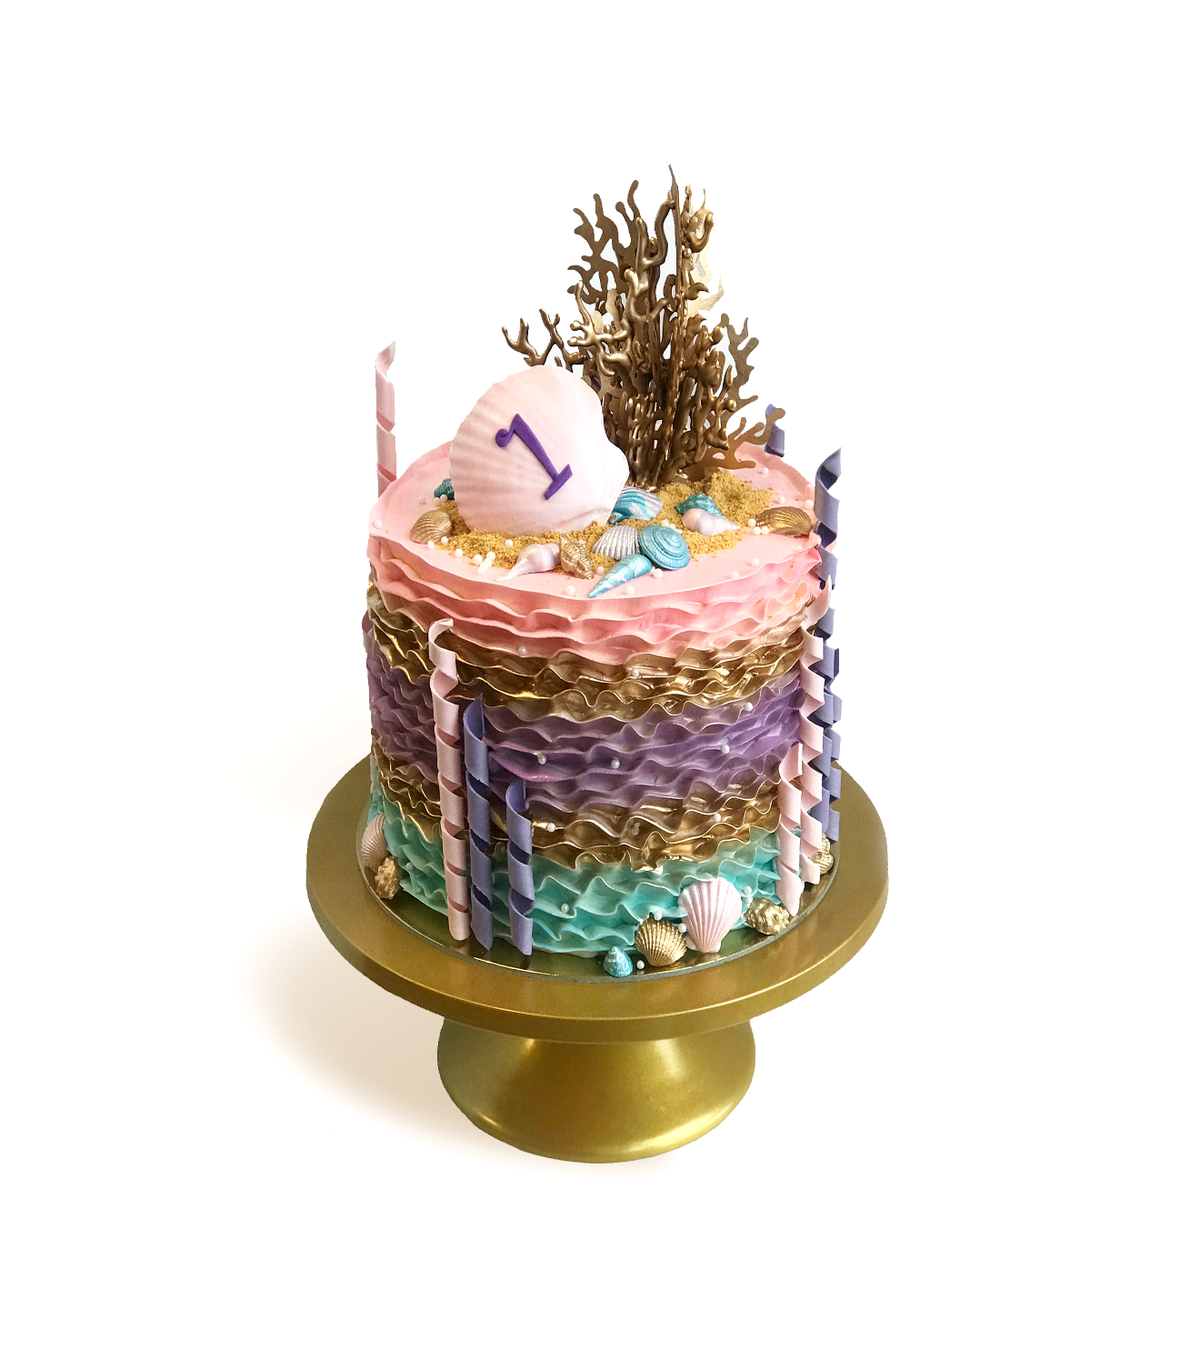 Whippt Desserts - Sea Cake Oct 20182